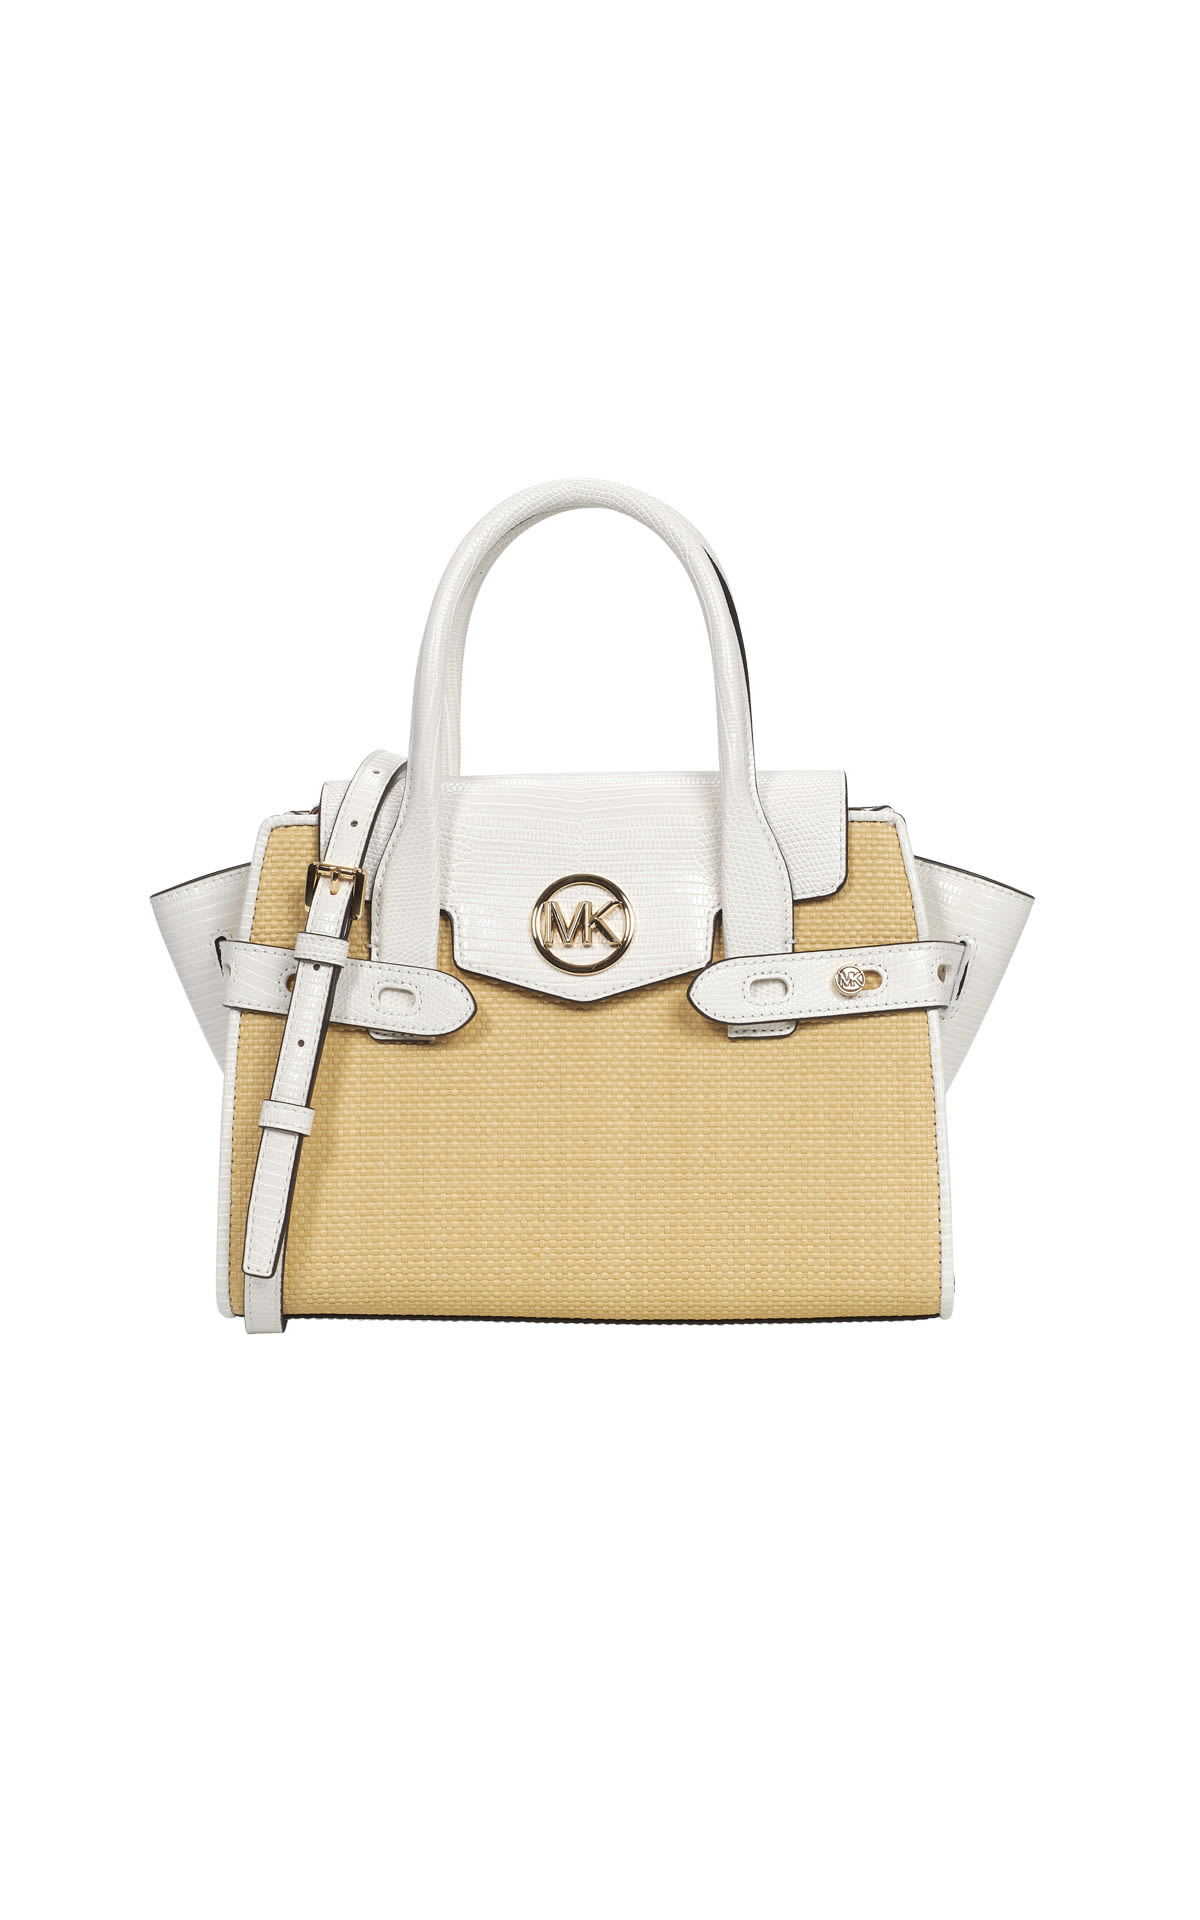 Optic white handbag Michael Kors